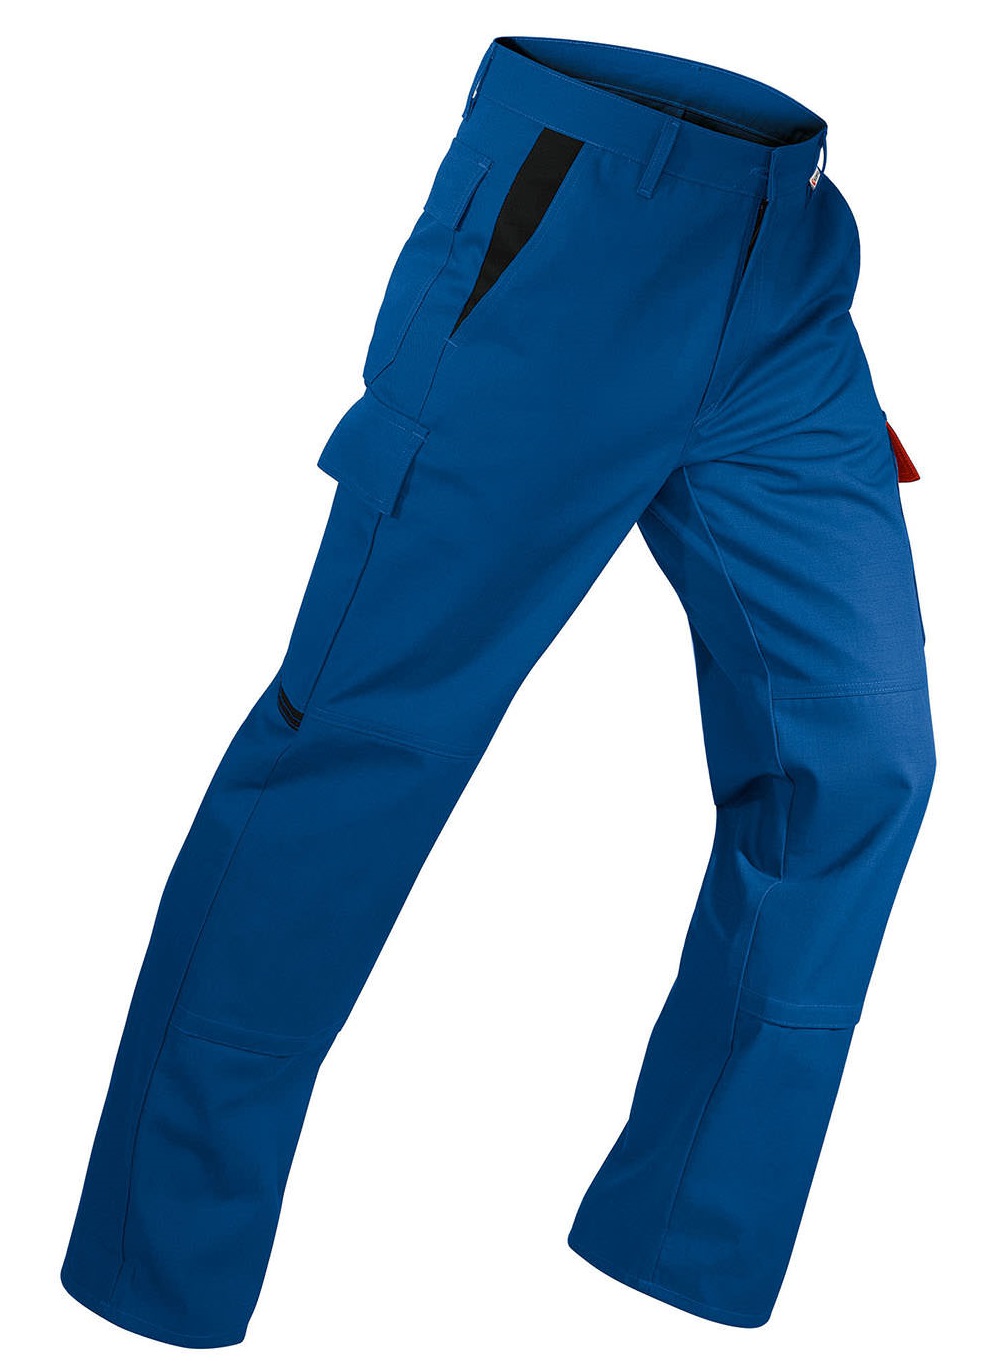 KEMPEL Bundhose Arbeitshose Berufshose Workerhose Arbeitskleidung Berufskleidung kornblau rot ca 340g